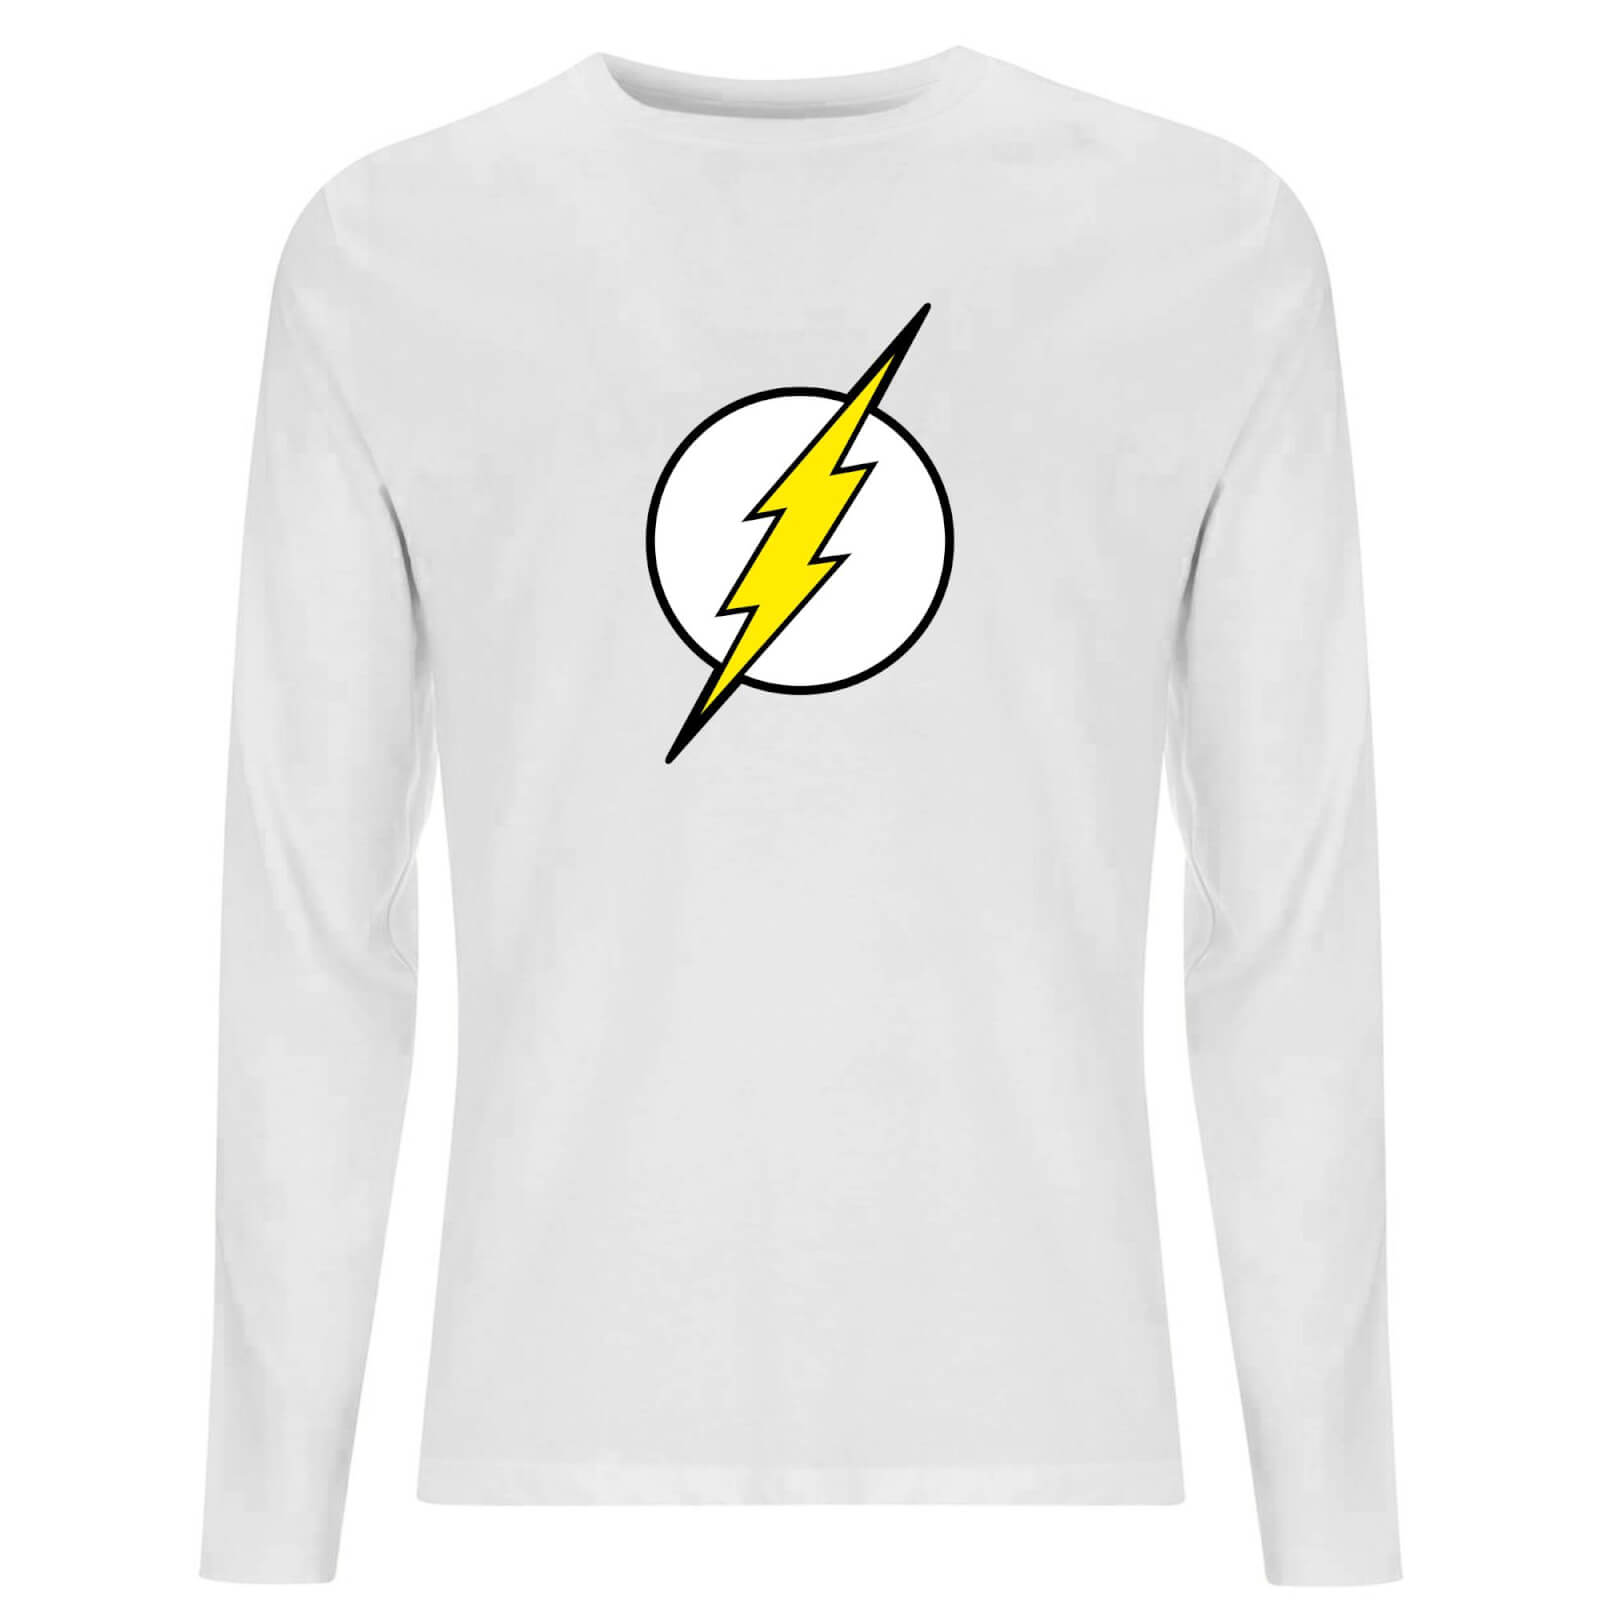 DC Justice League Core Flash Logo Unisex Long Sleeve T-Shirt - White - XS - White